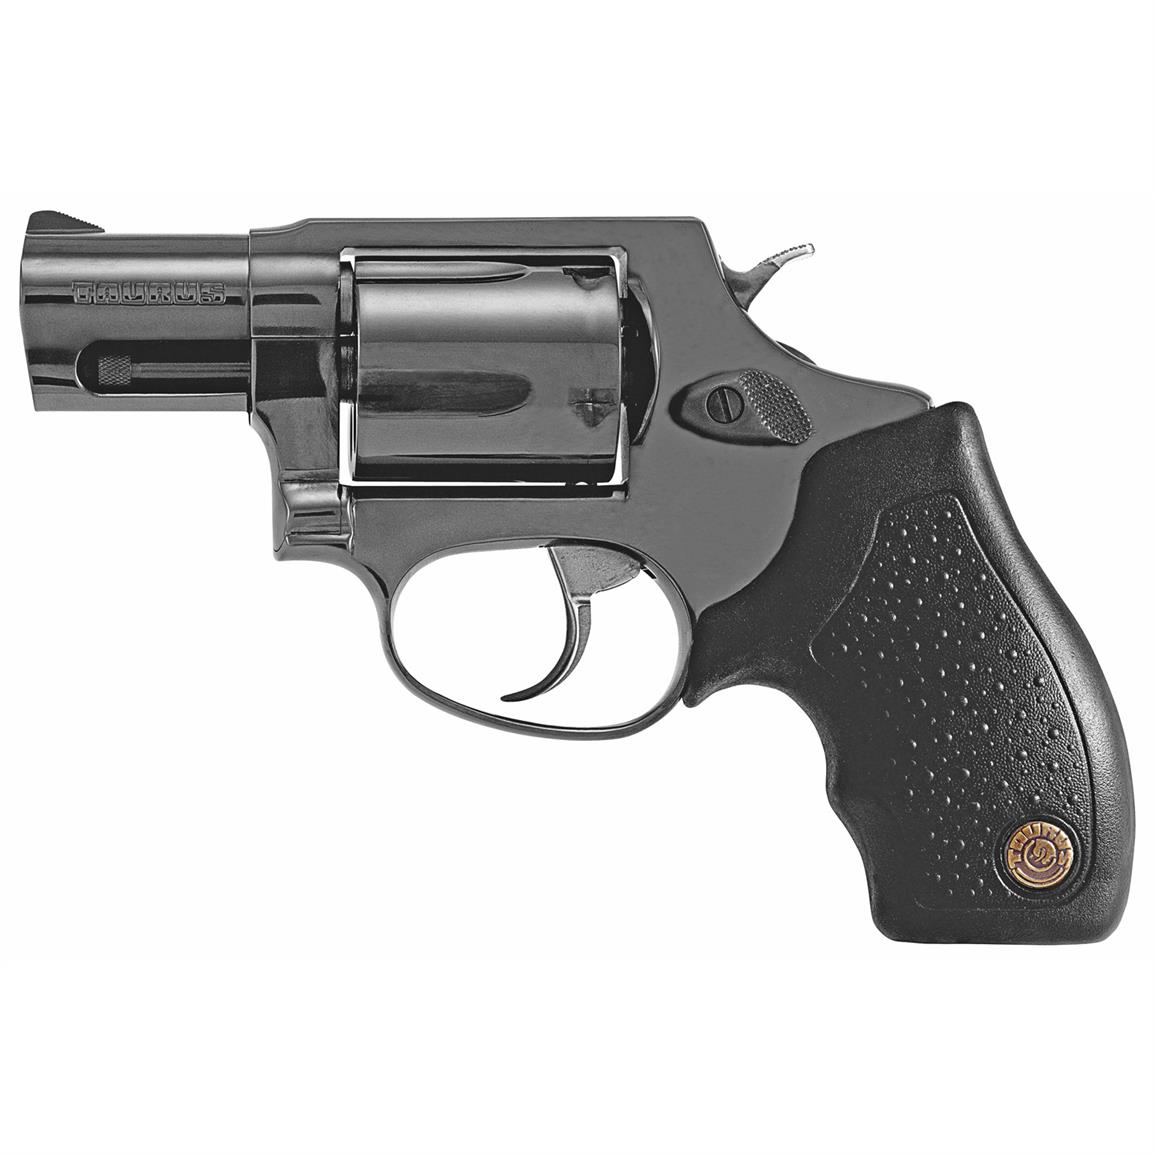 Taurus 605 Revolver 357 Magnum 2 Barrel 5 Rounds 647252 Revolver At Sportsmans Guide